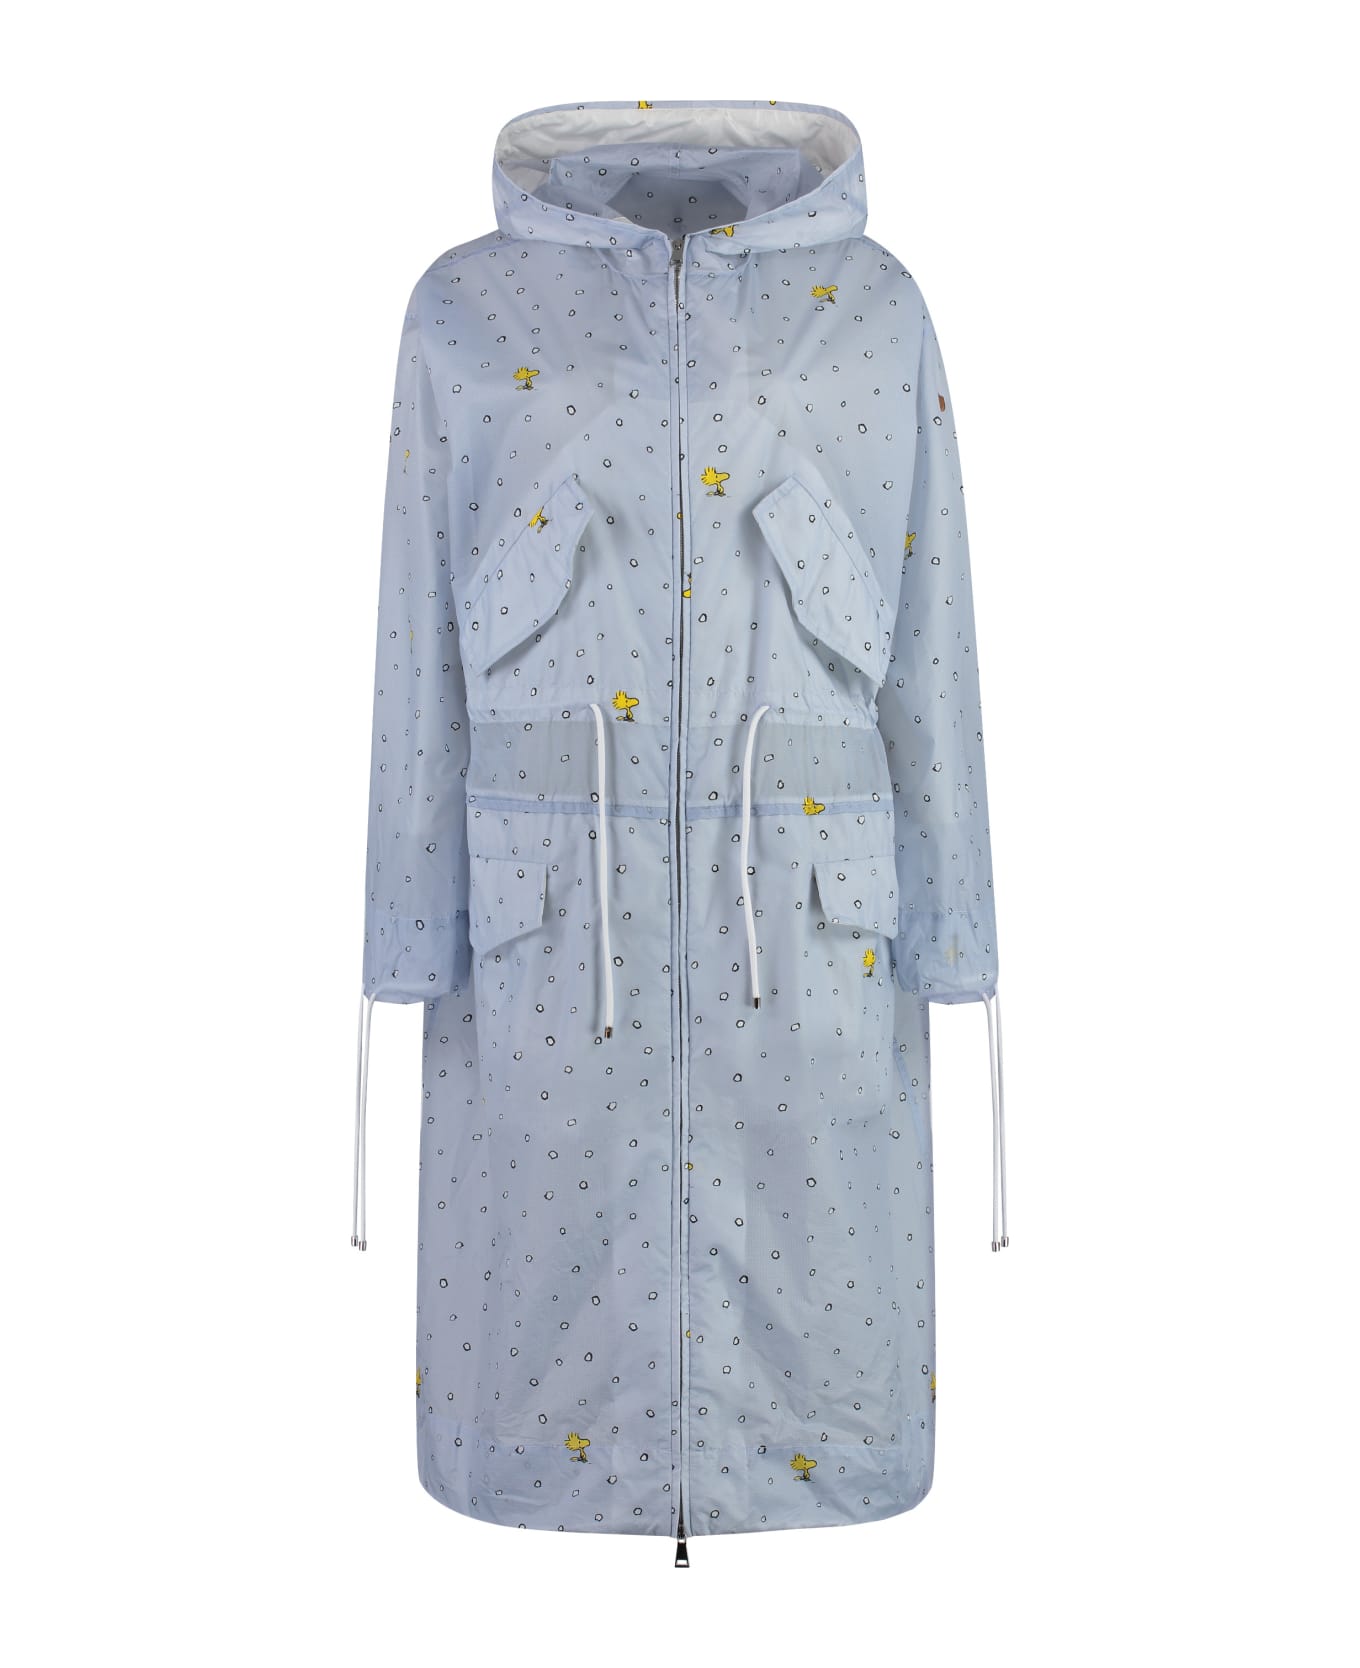 Moncler X Peanuts - Erne Hooded Raincoat - Light Blue